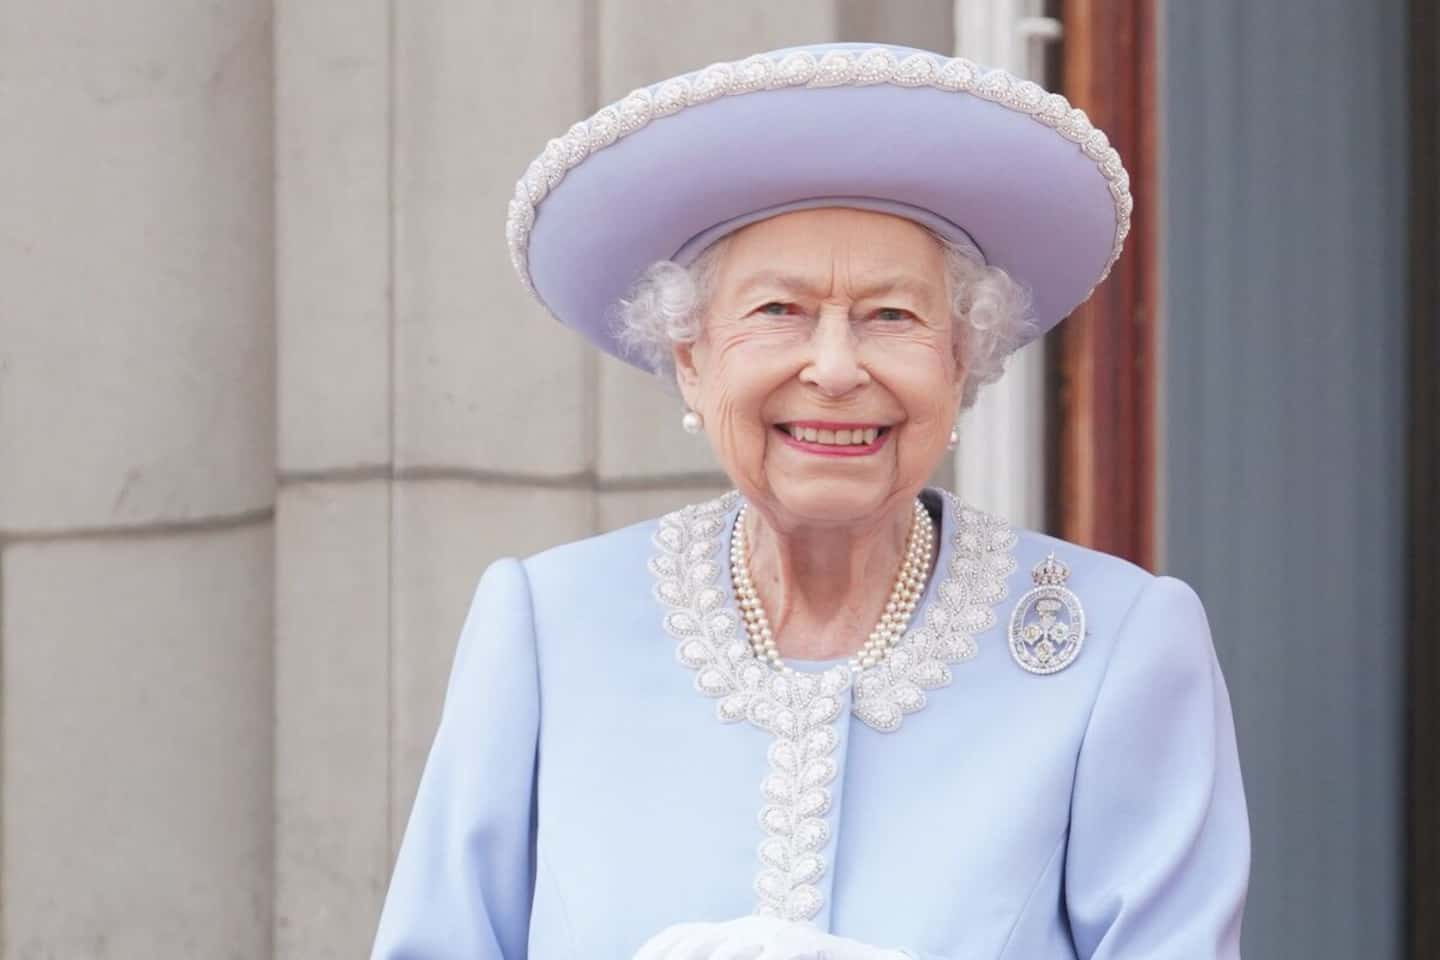 Queen Elizabeth II cheered on the balcony of Buckingham Palace